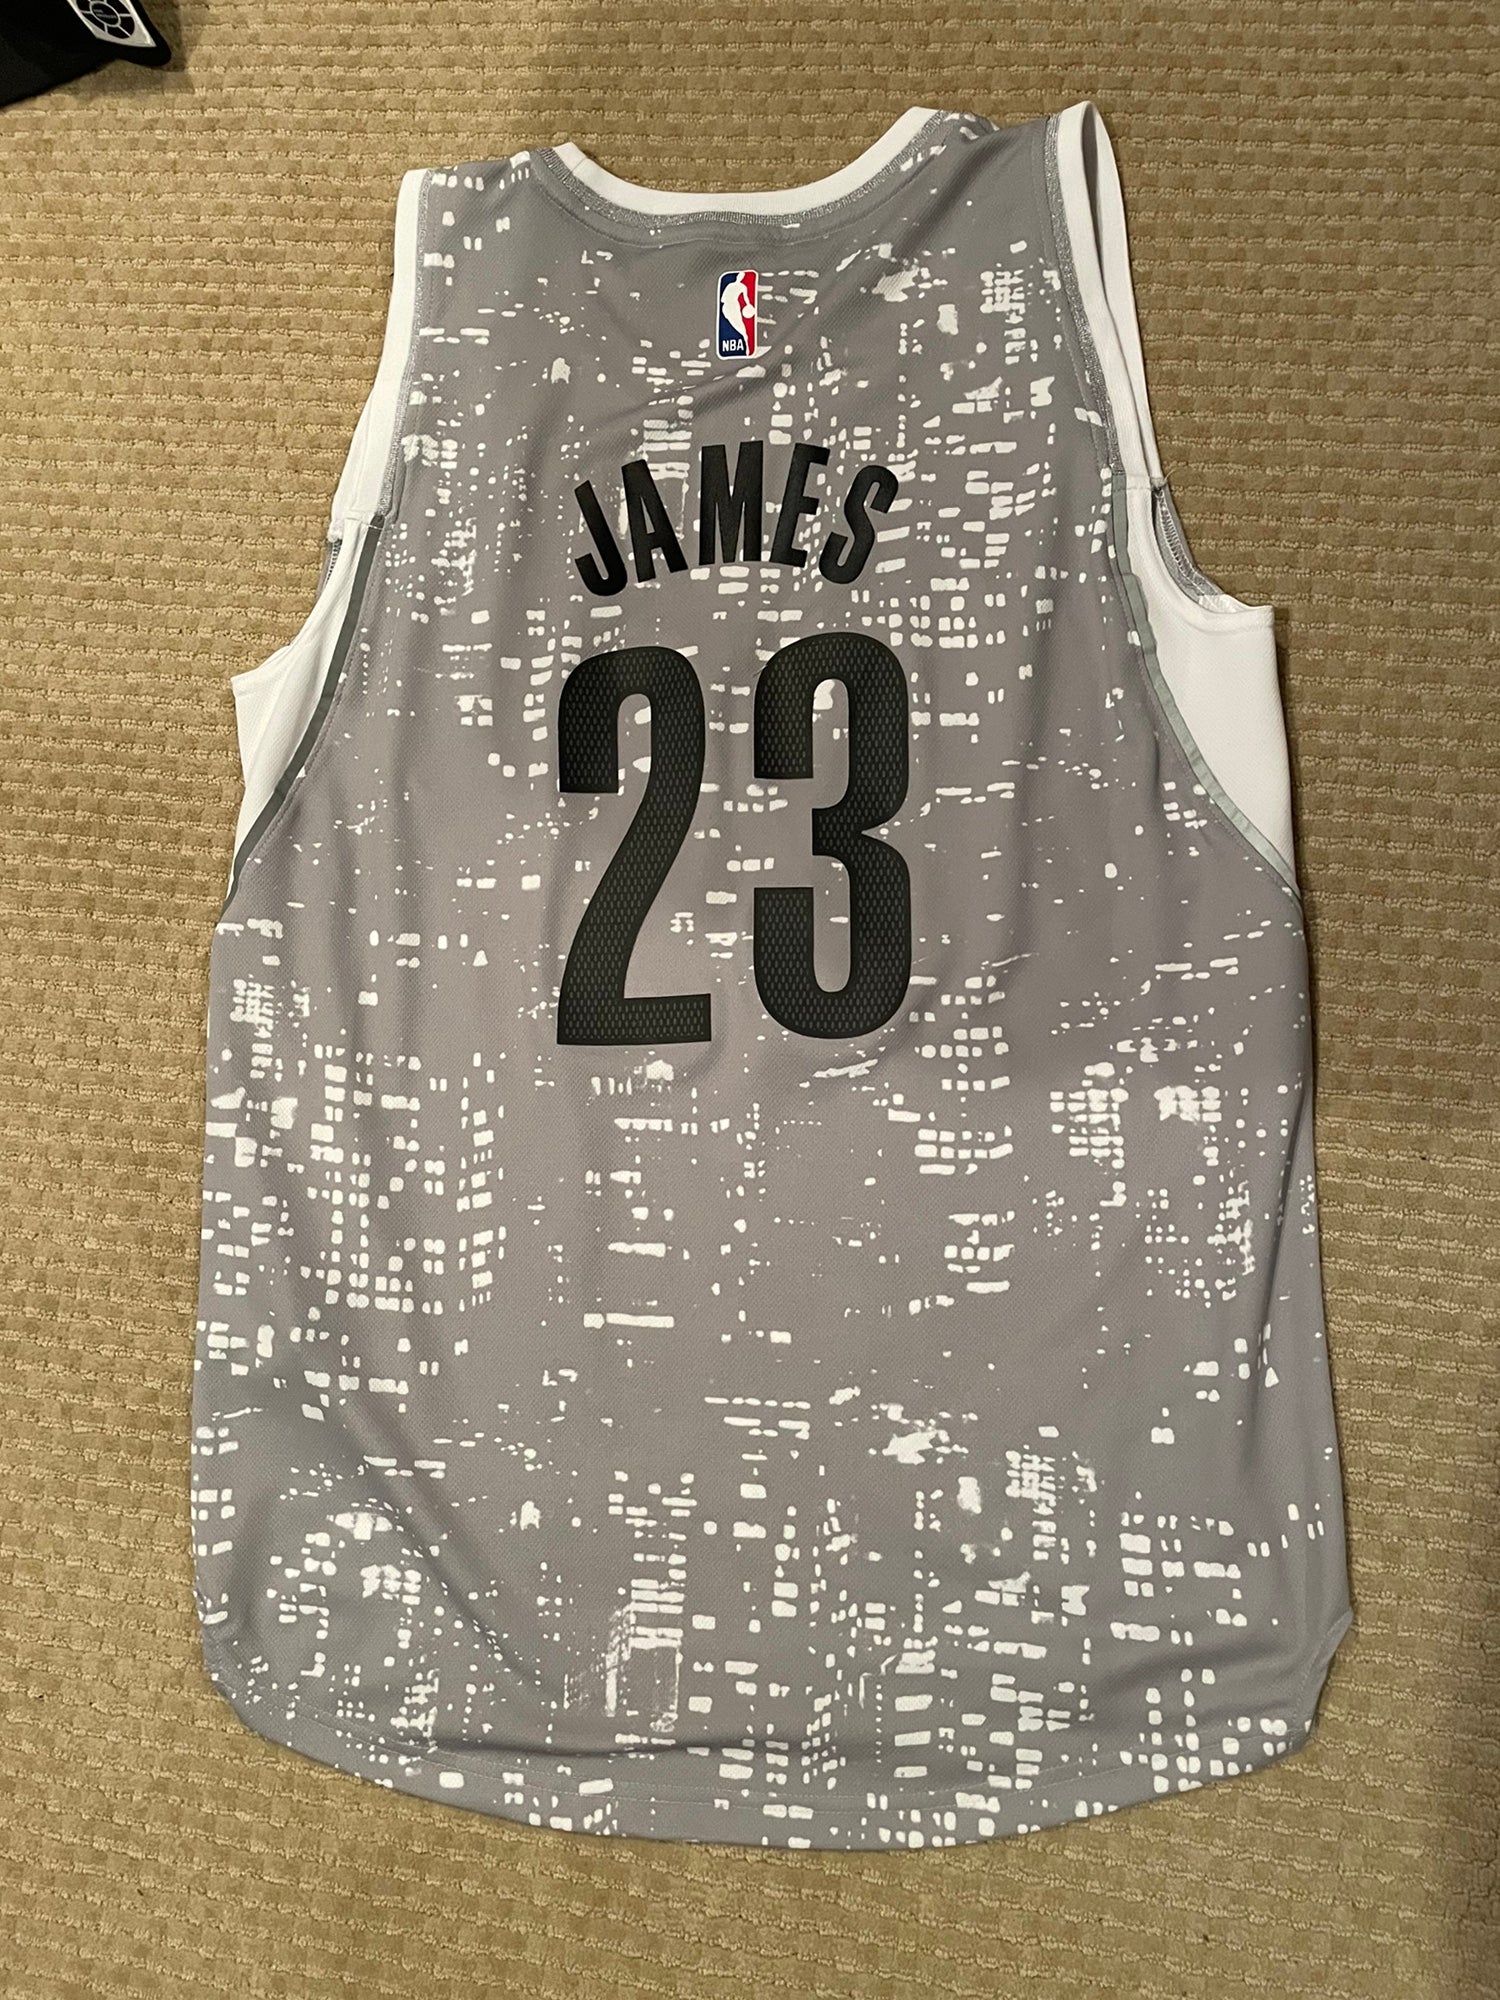 Cleveland Cavaliers #23 LeBron James Black City Lights Jersey